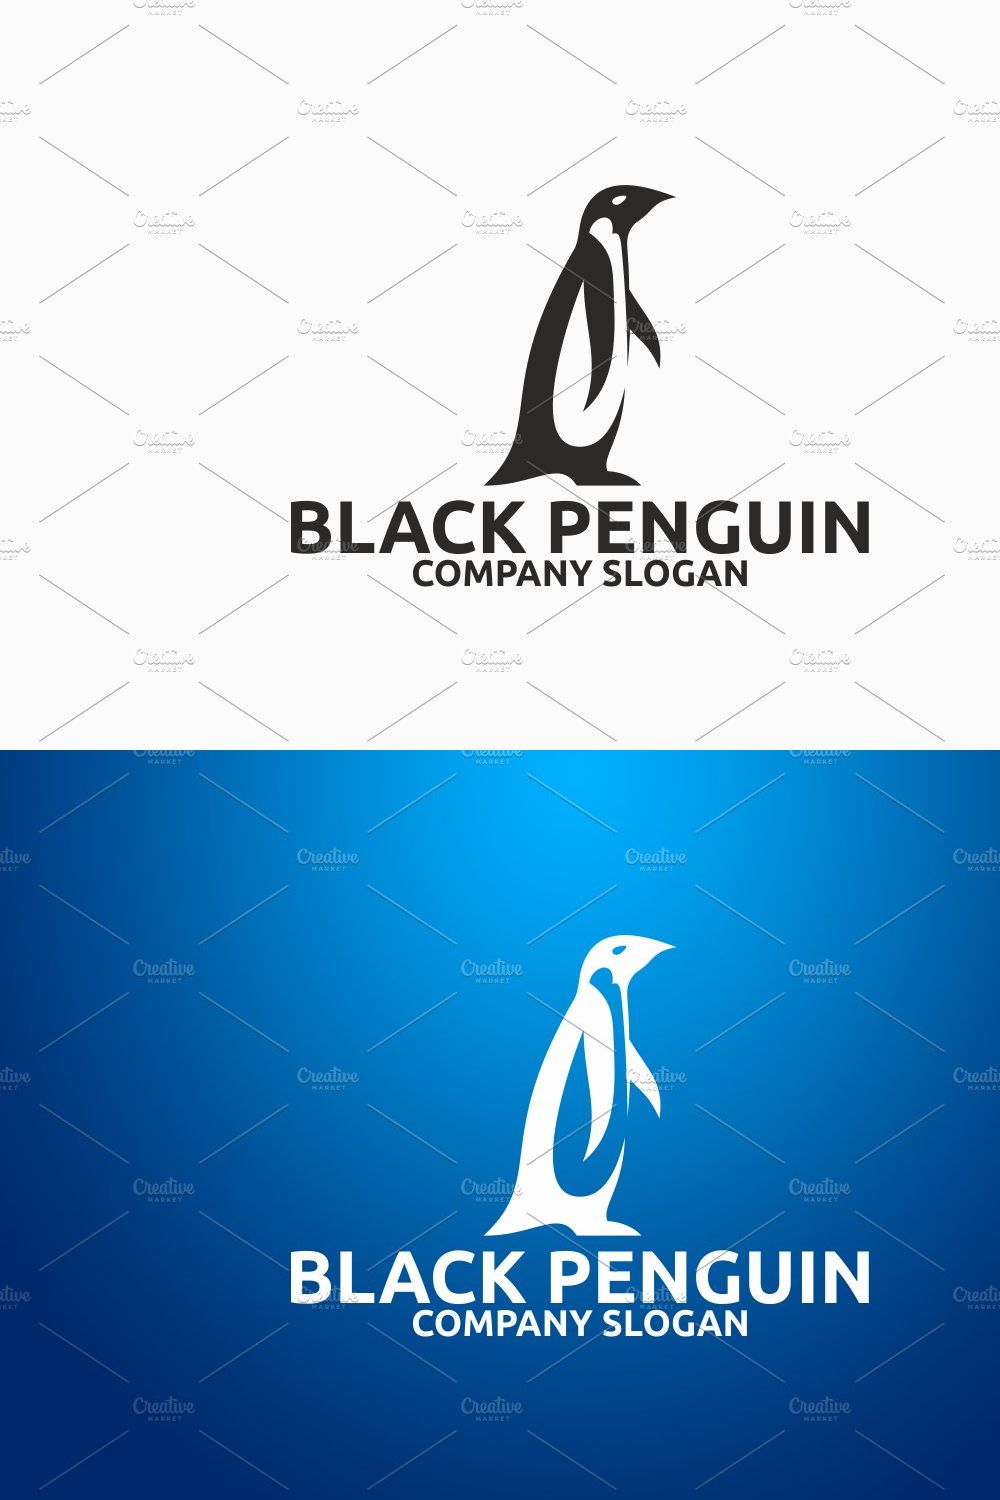 Black Penguin pinterest preview image.